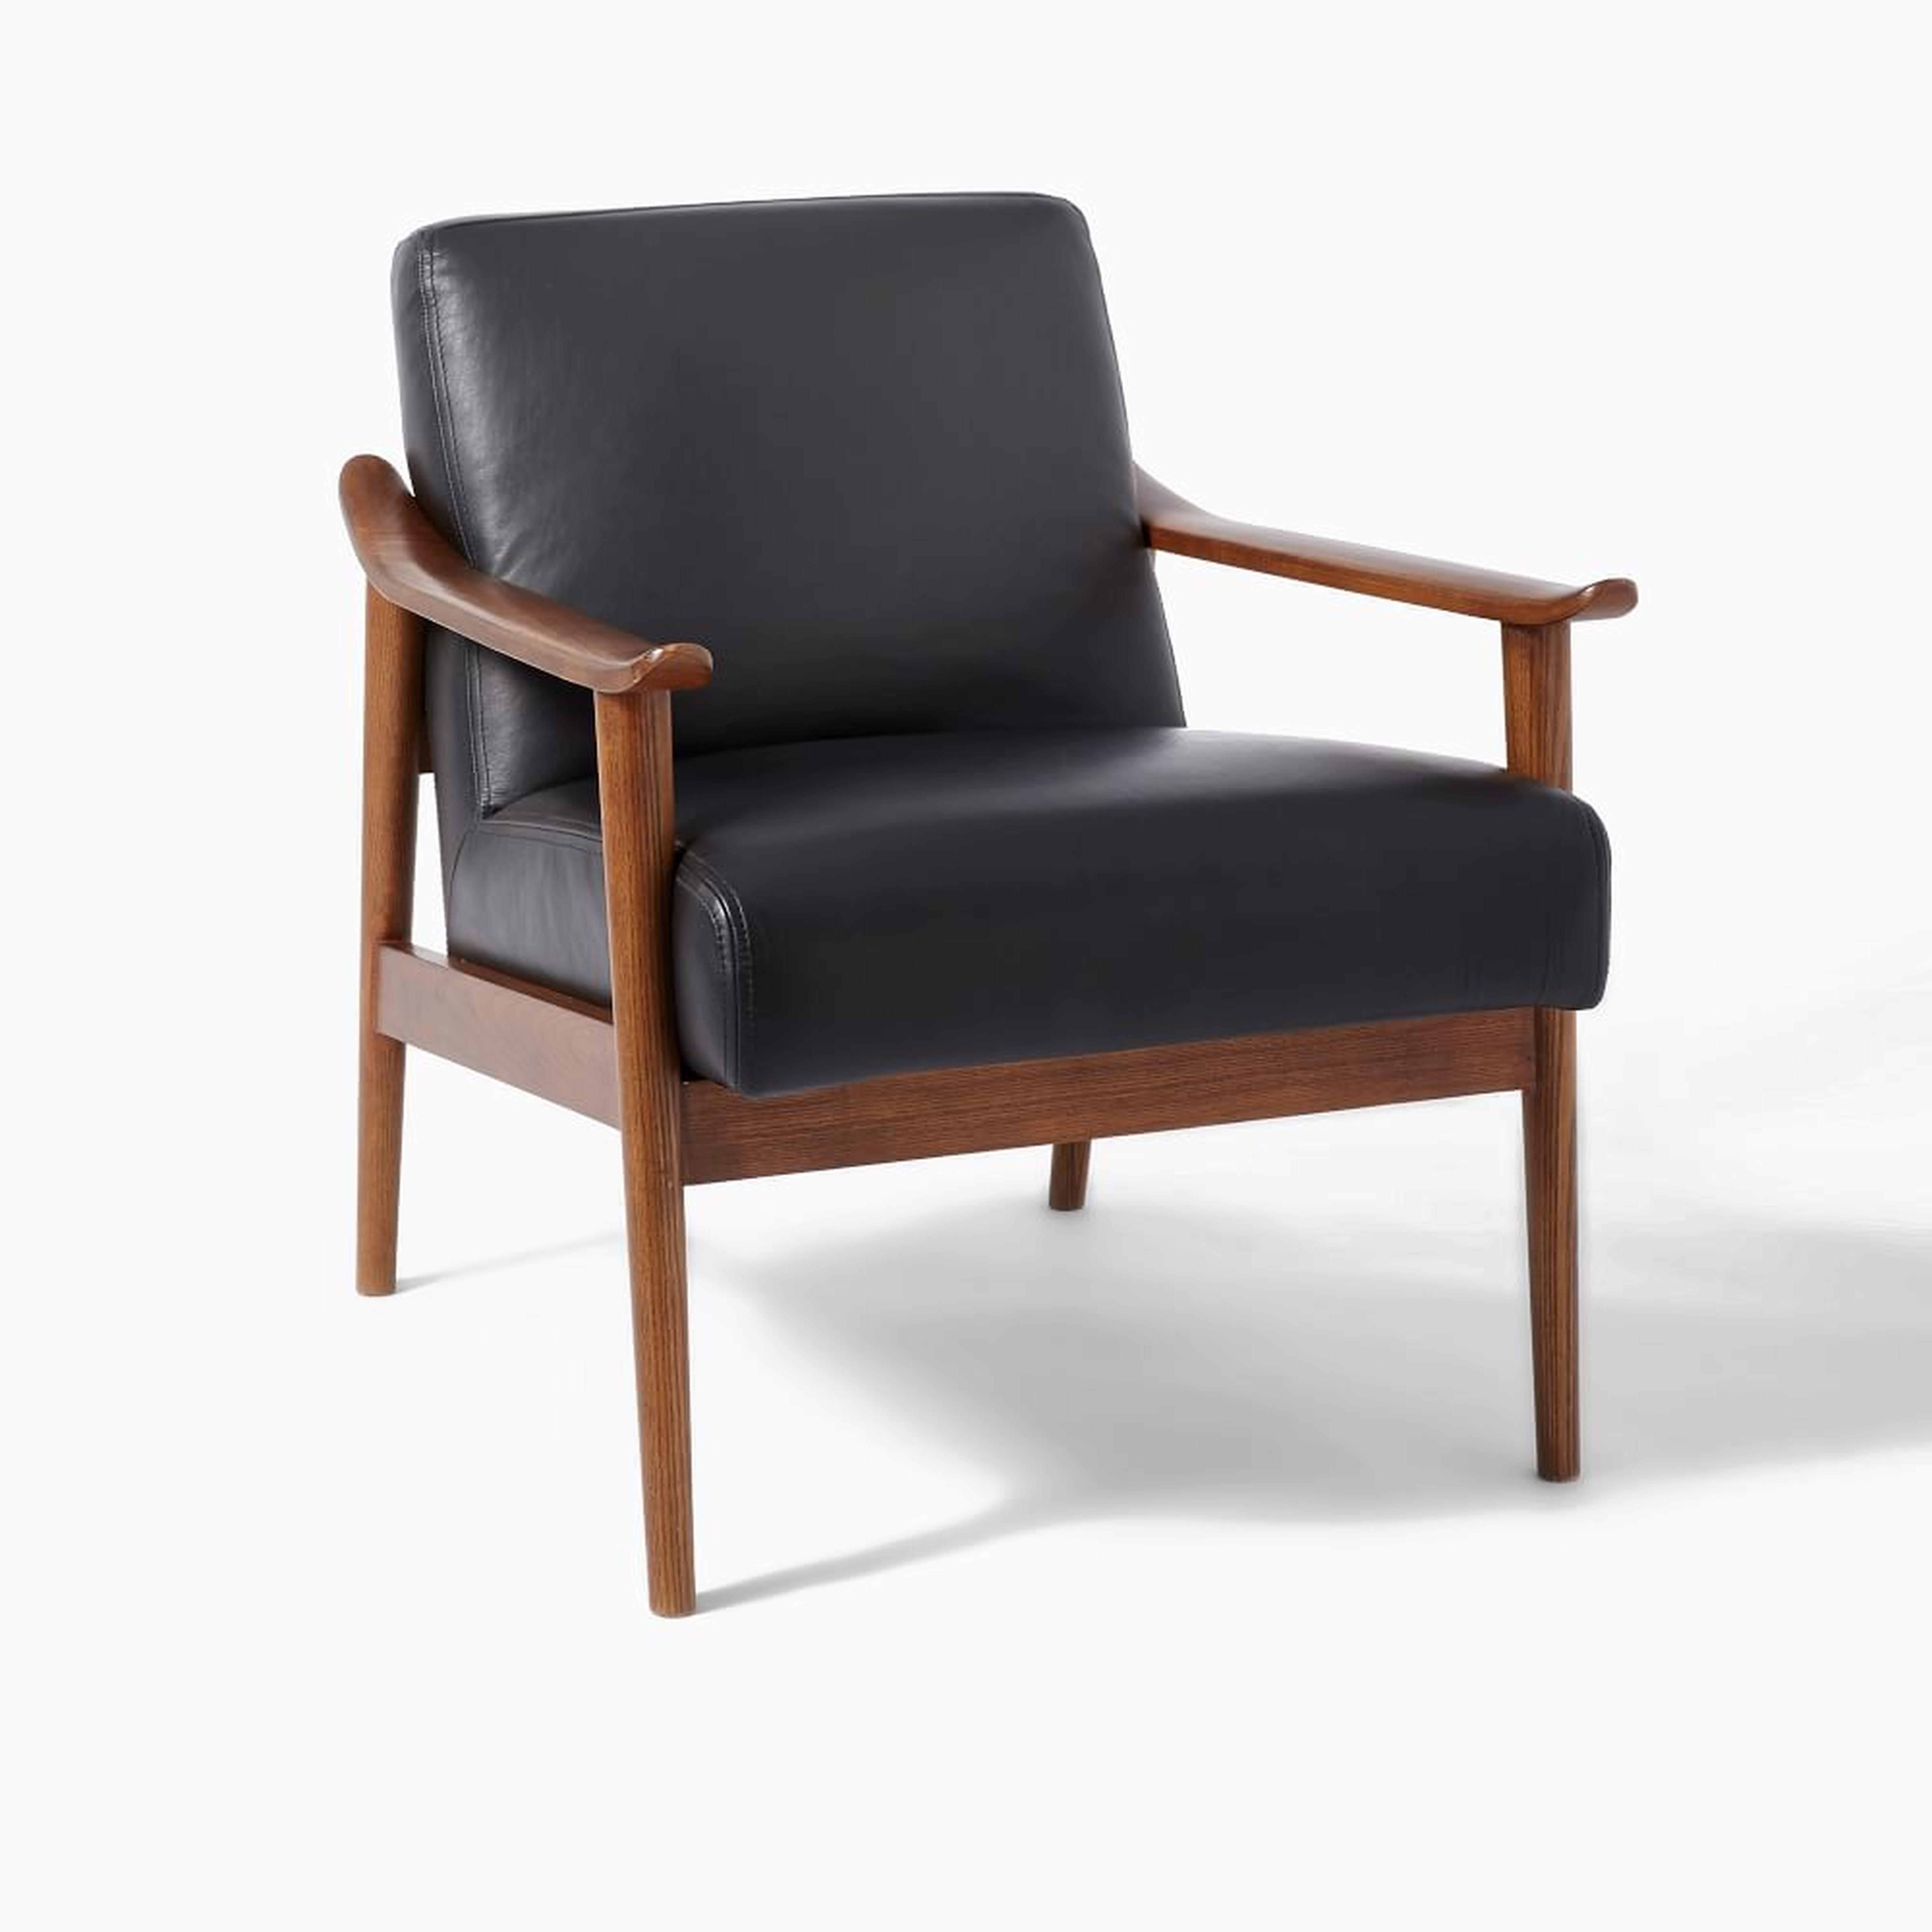 Midcentury Show Wood Chair, Sierra Leather, Licorice, Pecan - West Elm